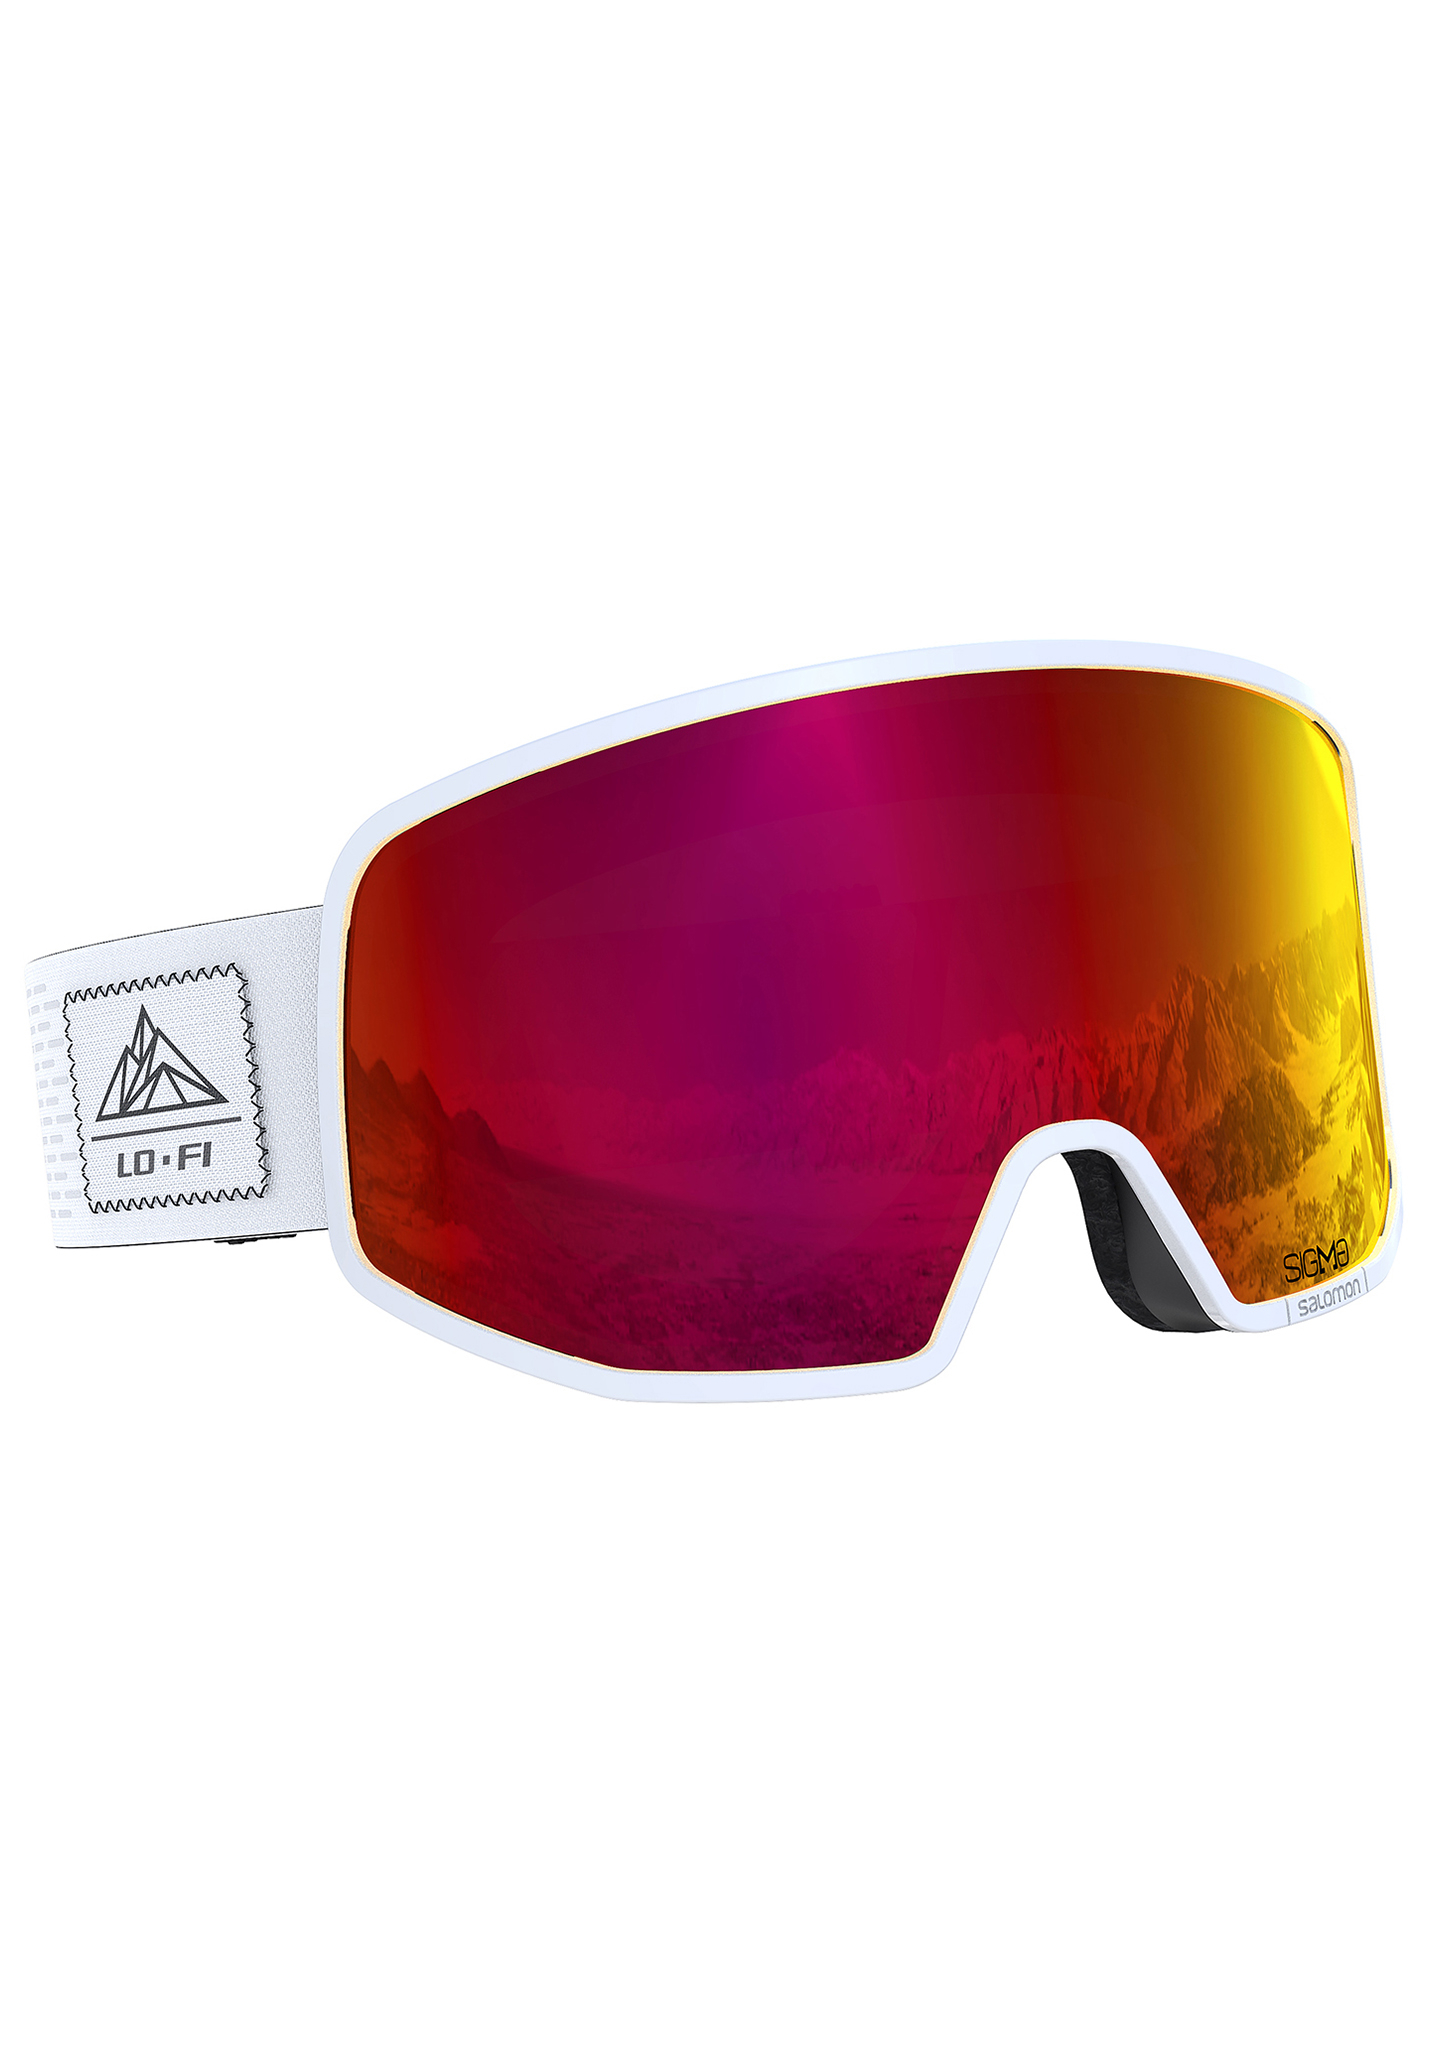 Salomon Lo Fi Sigma Snowboardbrillen rosa/gelb One Size